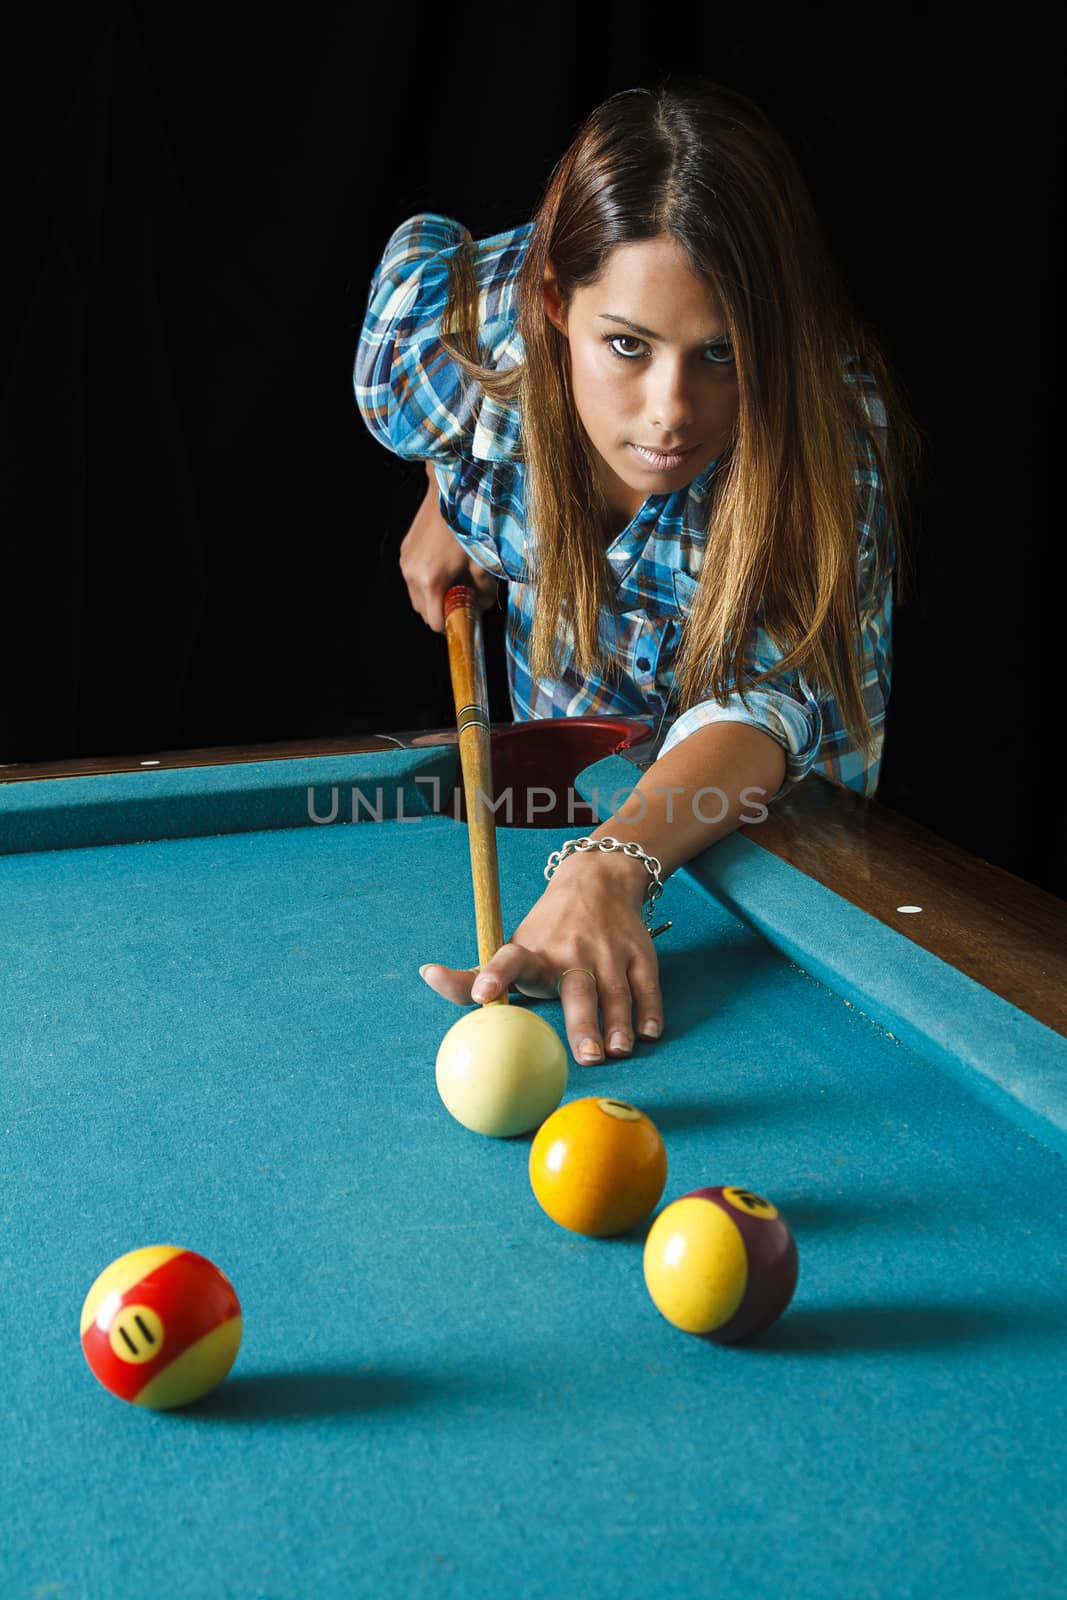 twenty something beautiful girl wearing a low cut plaid shirt about to shoot pool